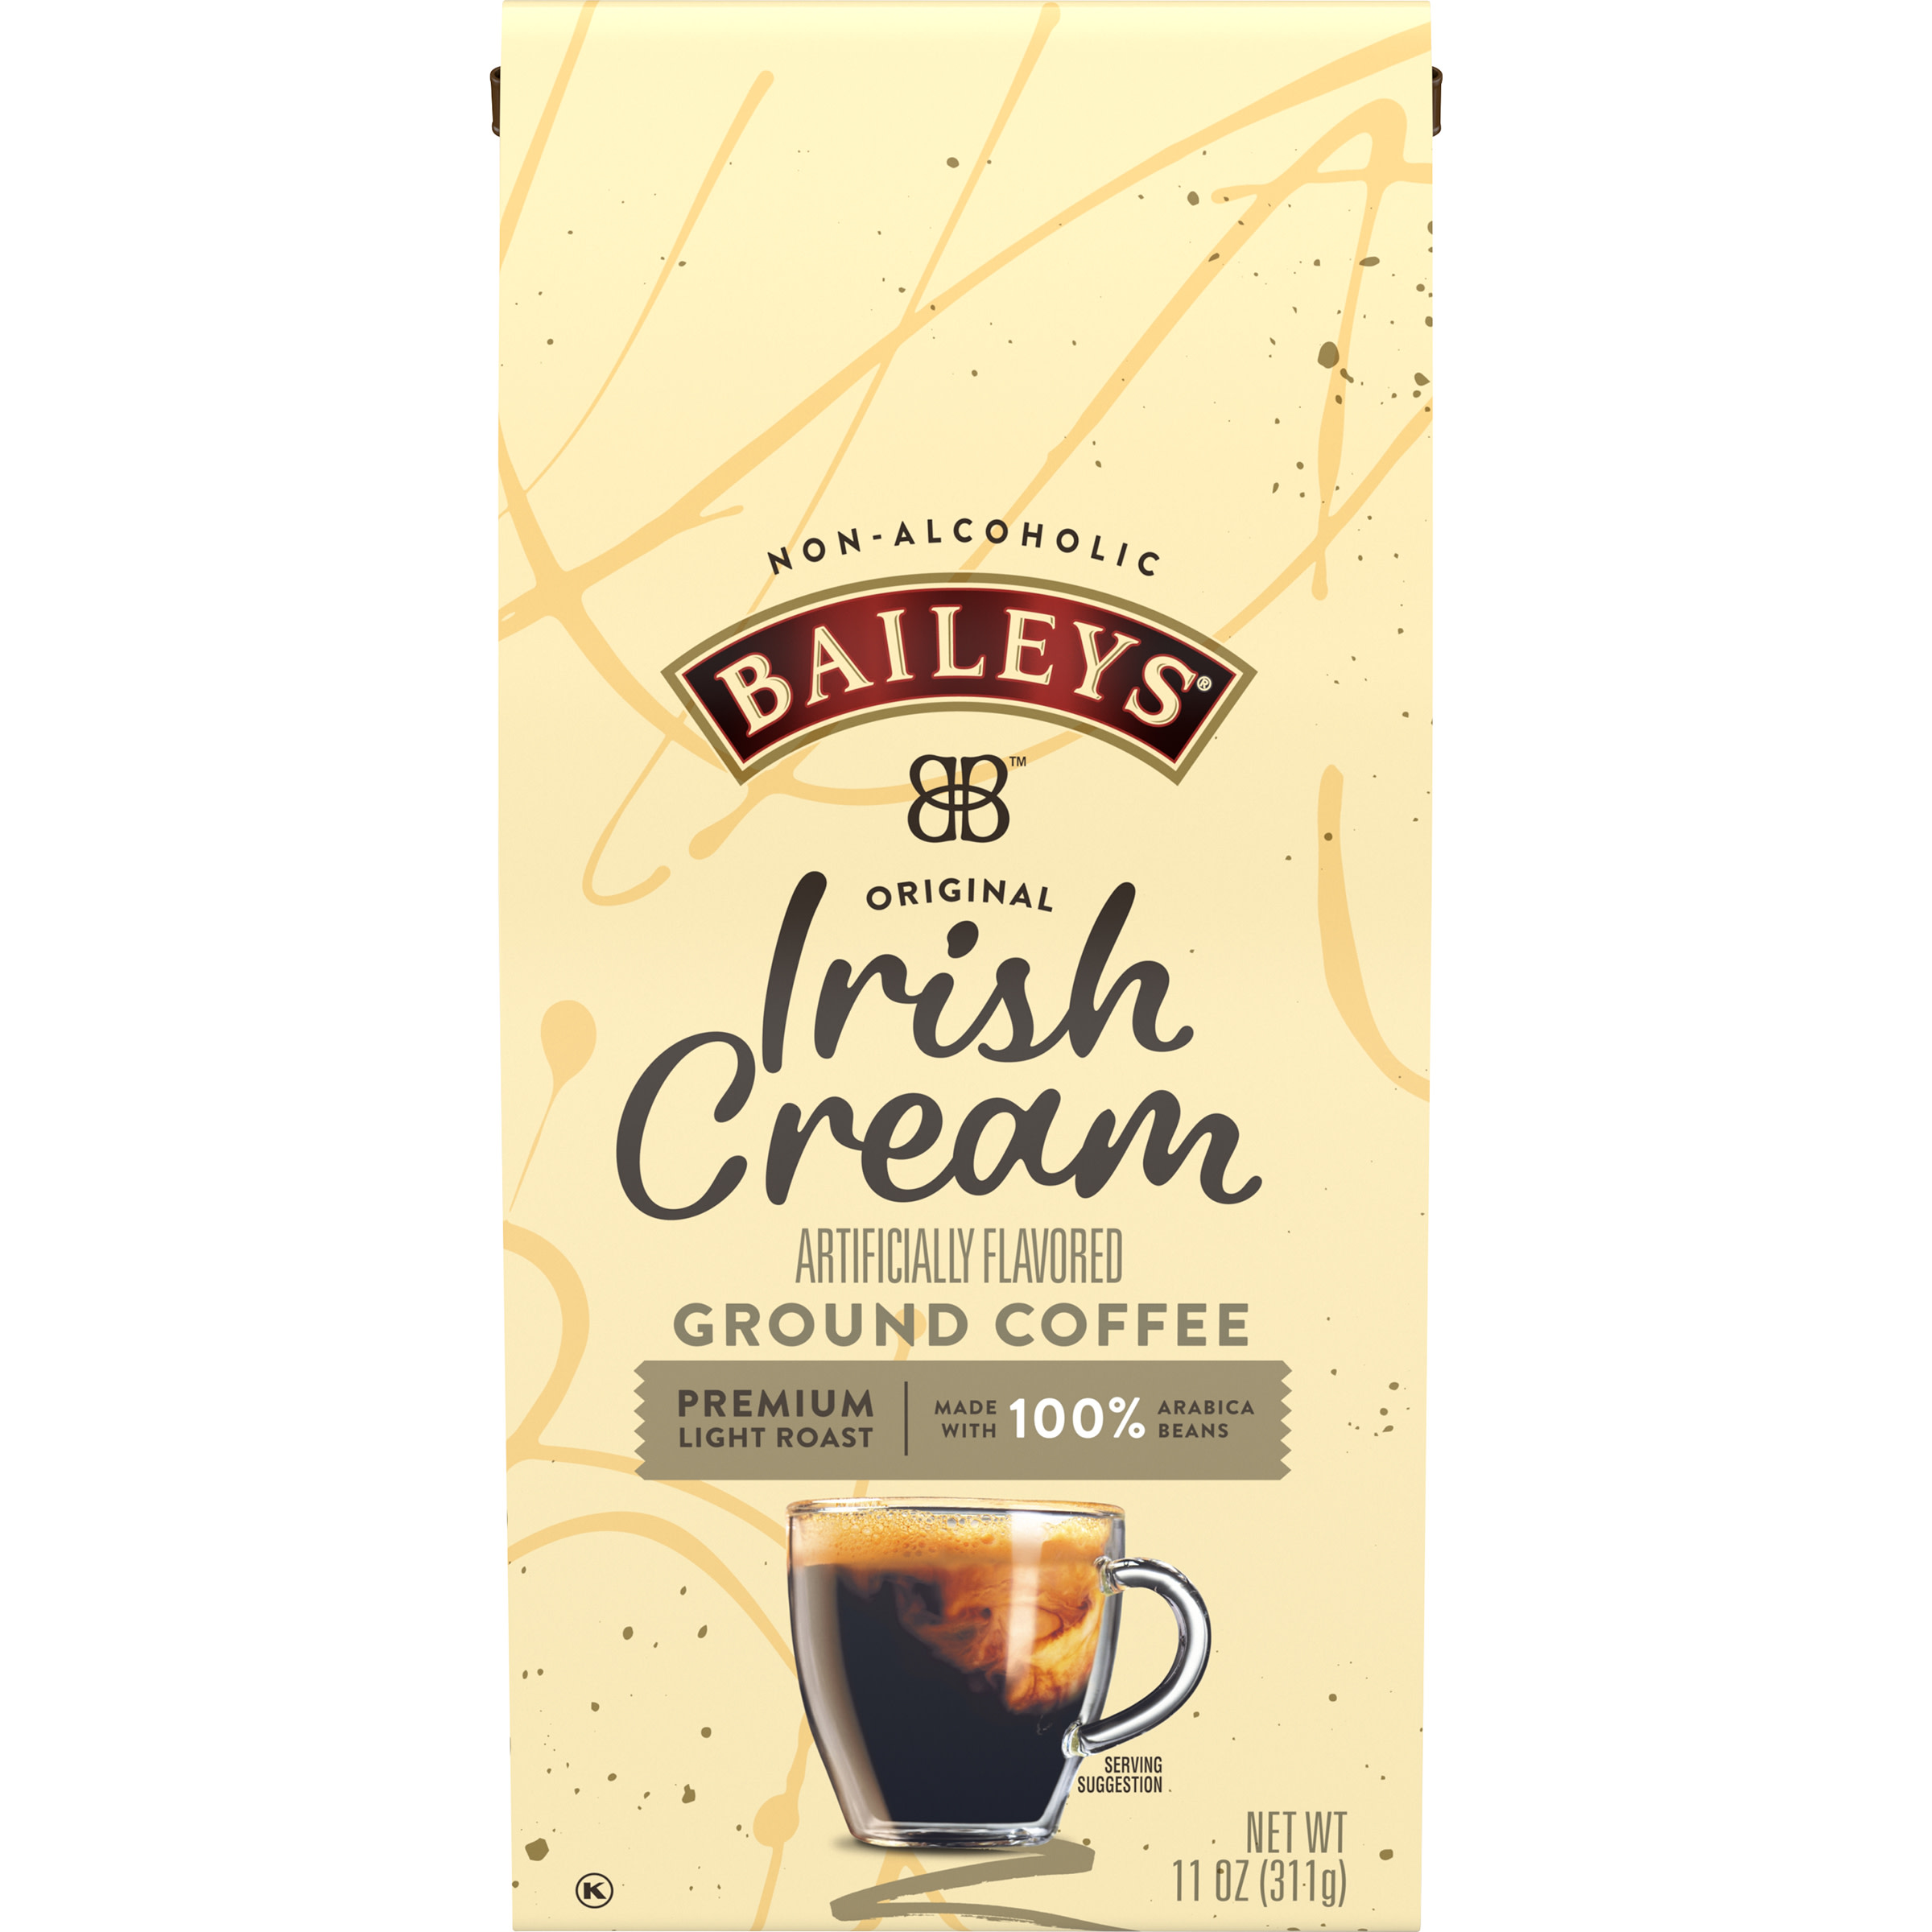 Baileys Non-Alcoholic Original Irish Cream Light Roast Ground Coffee, 11 oz Bag - image 1 of 7